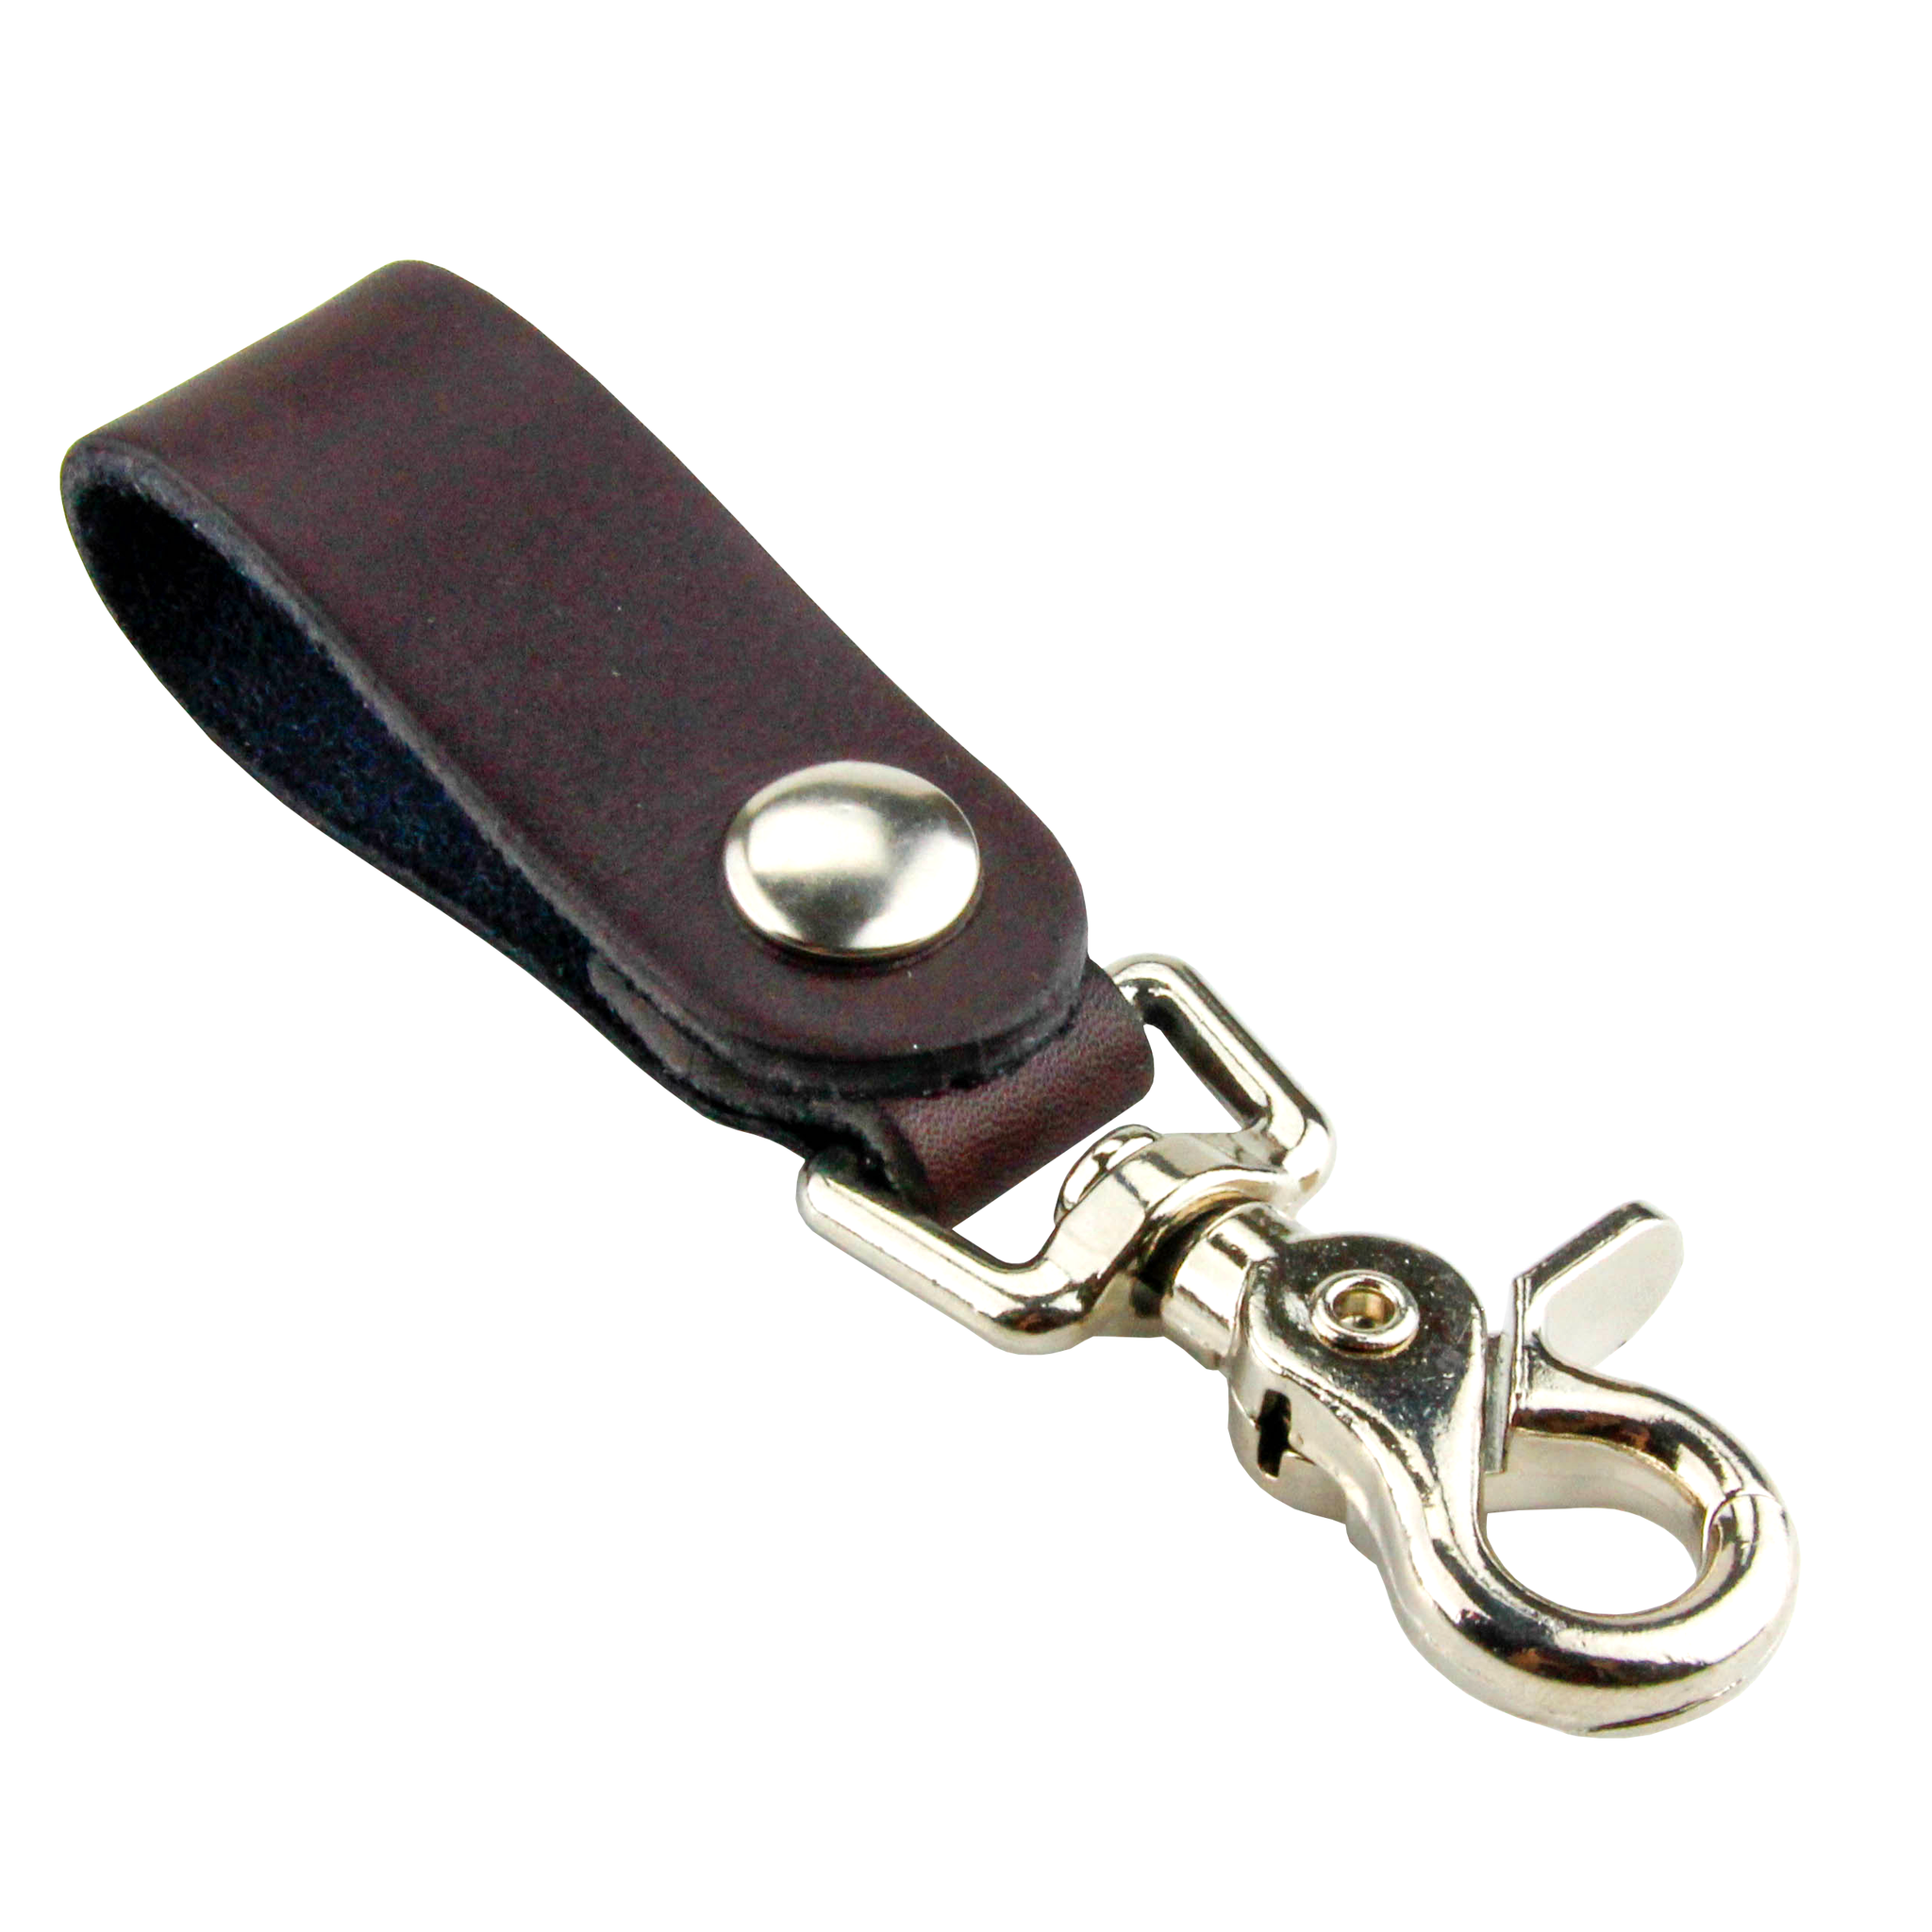 Wholesale card holder belt clip to Make Daily Life Easier